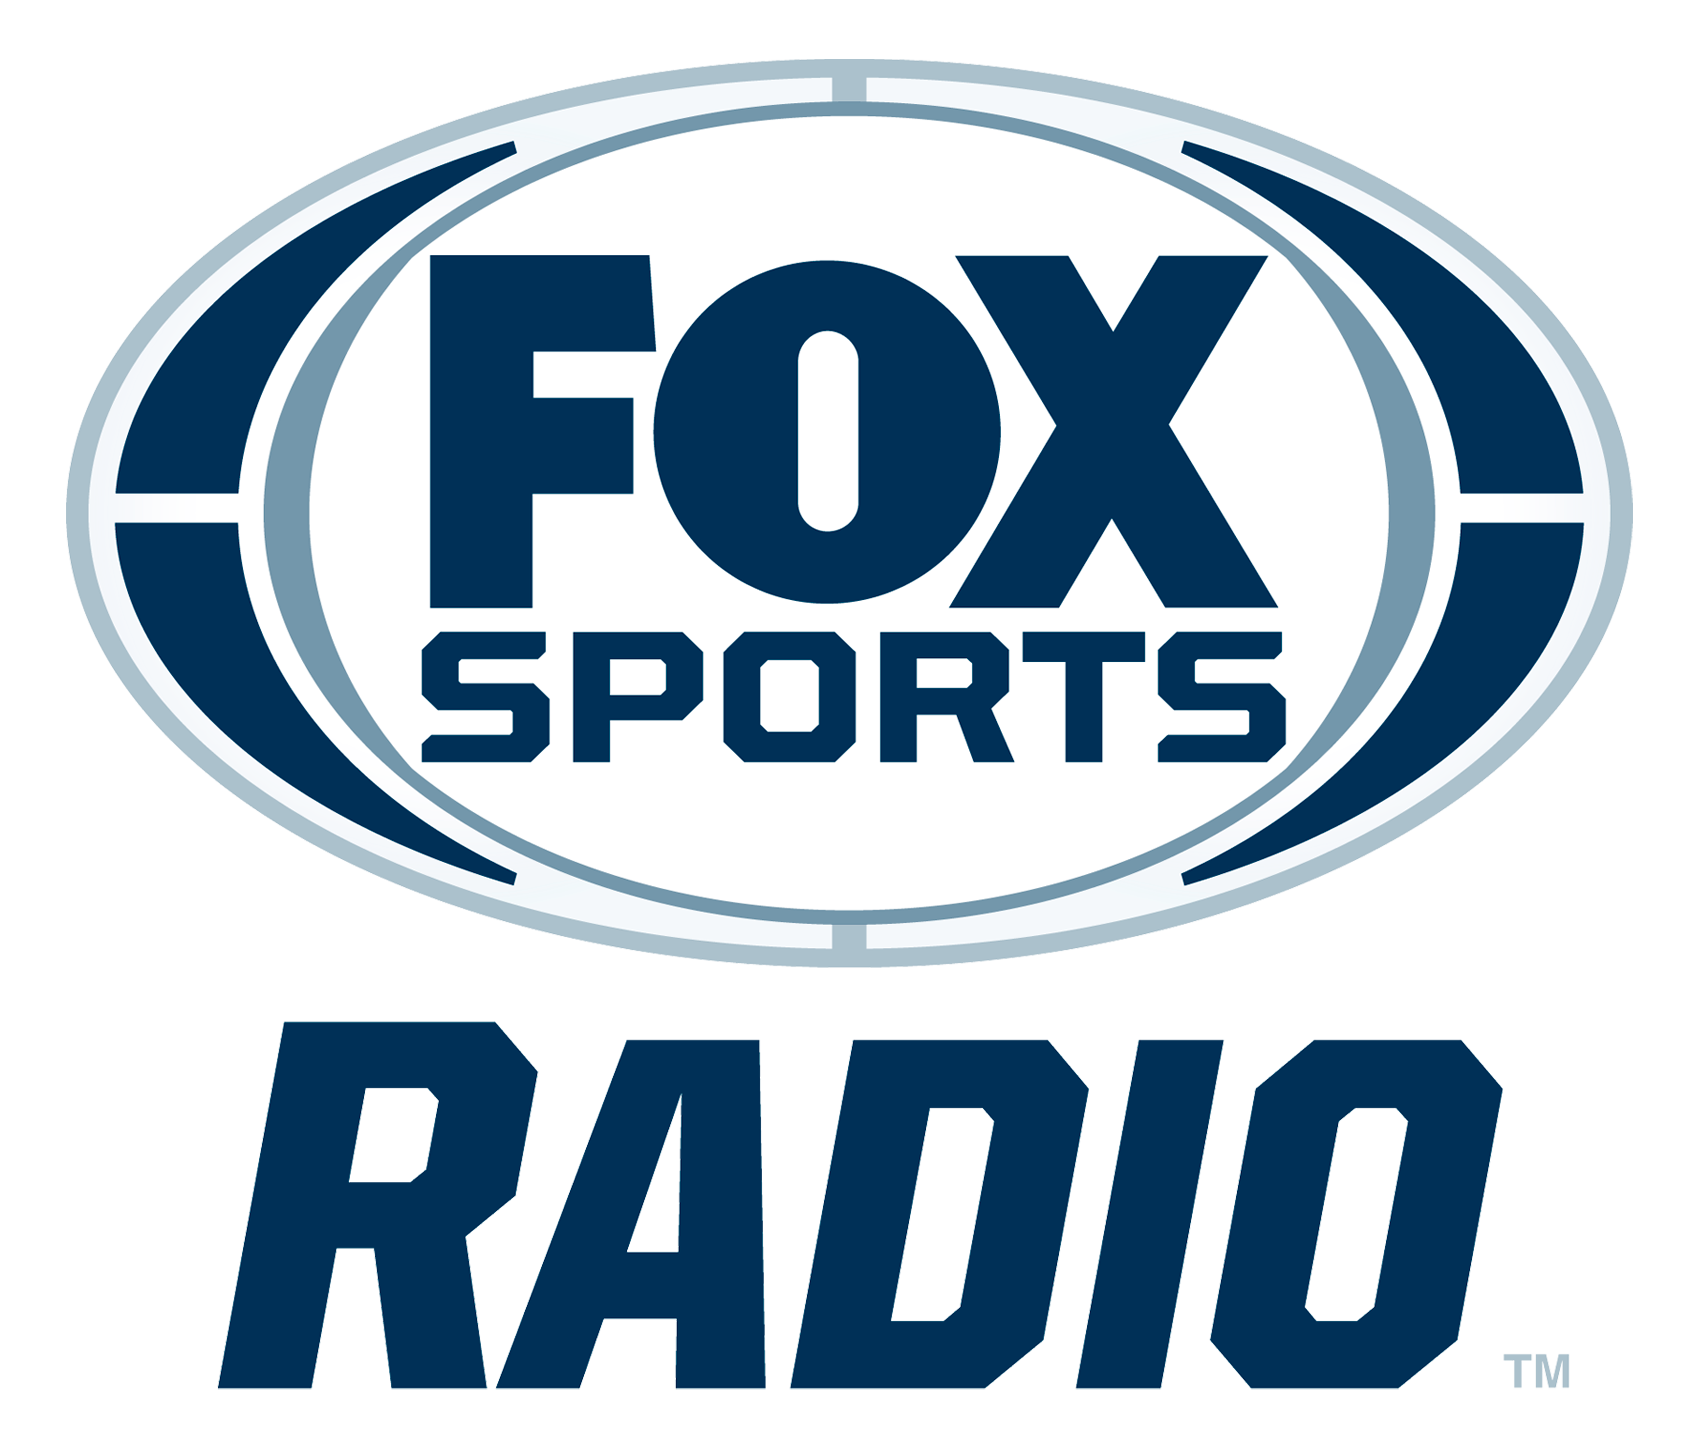 FOX Sports Radio